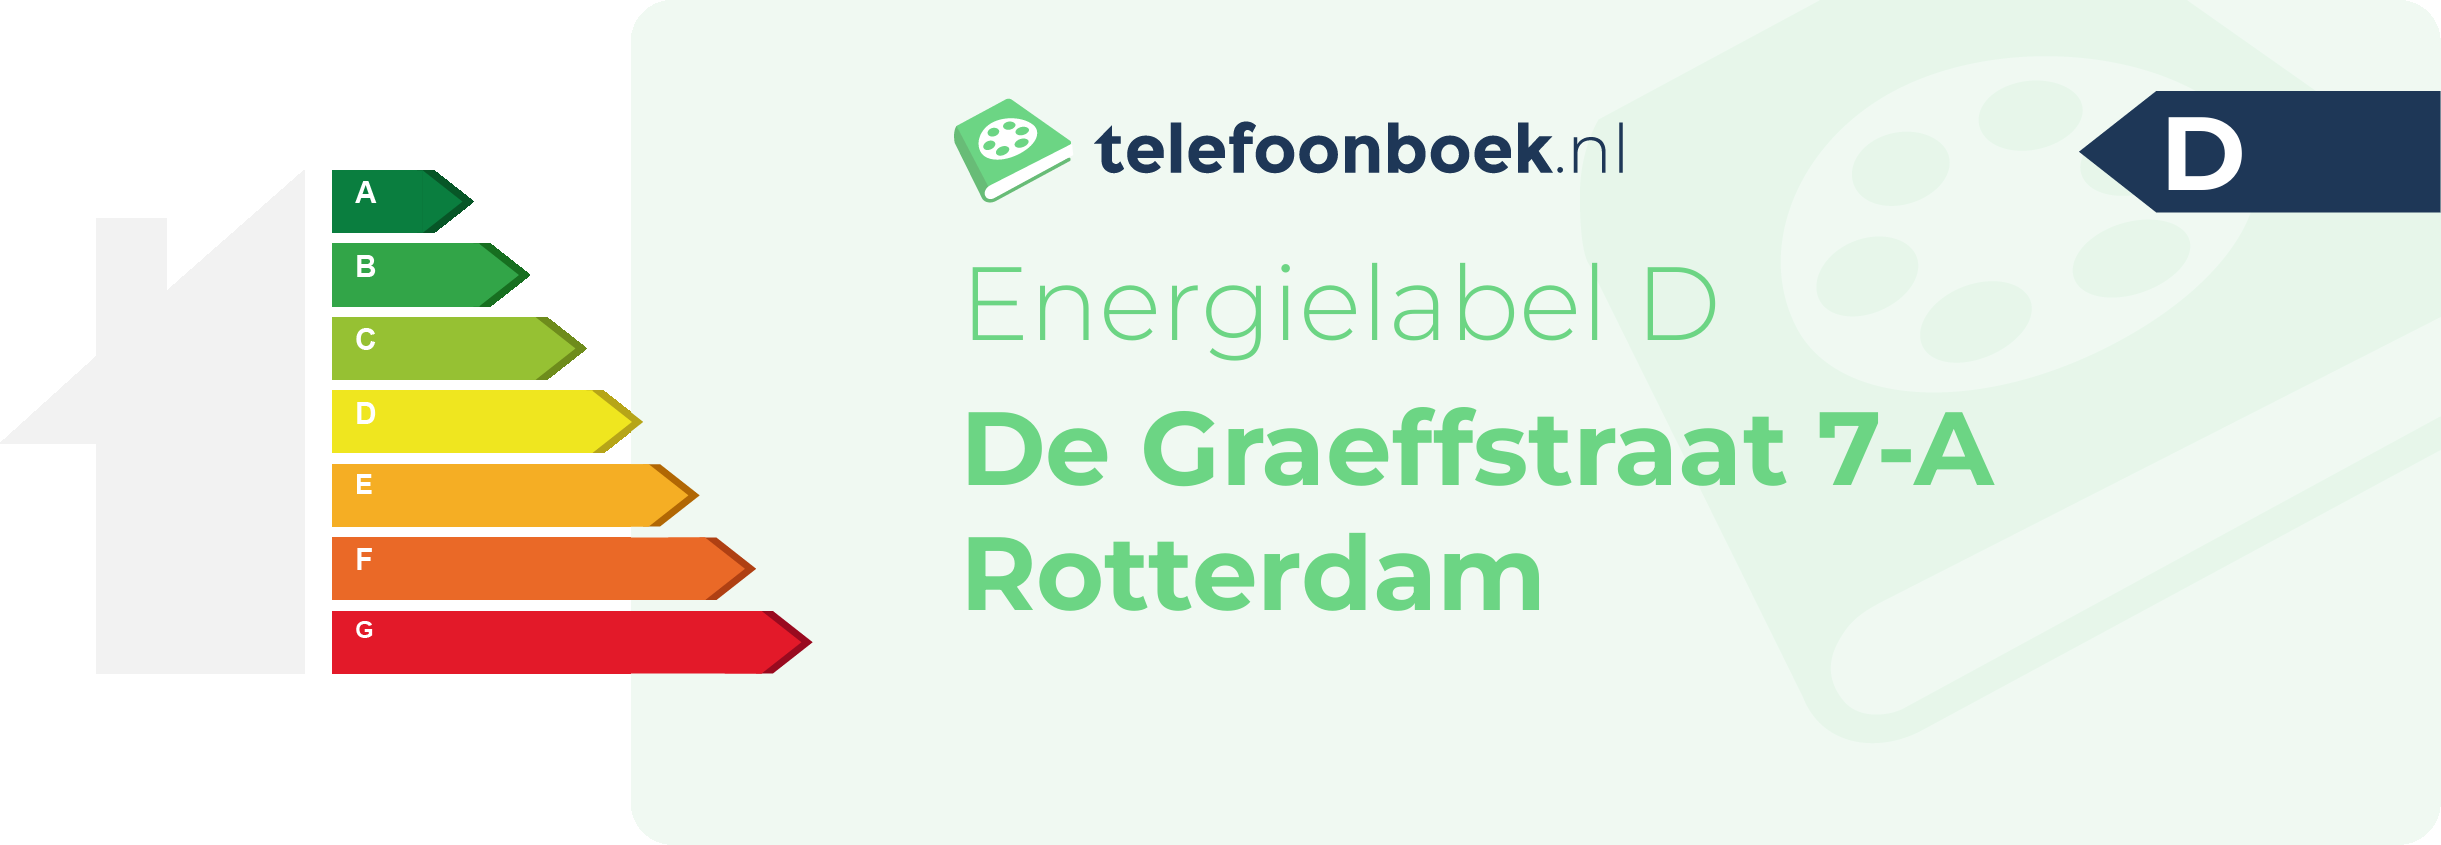 Energielabel De Graeffstraat 7-A Rotterdam